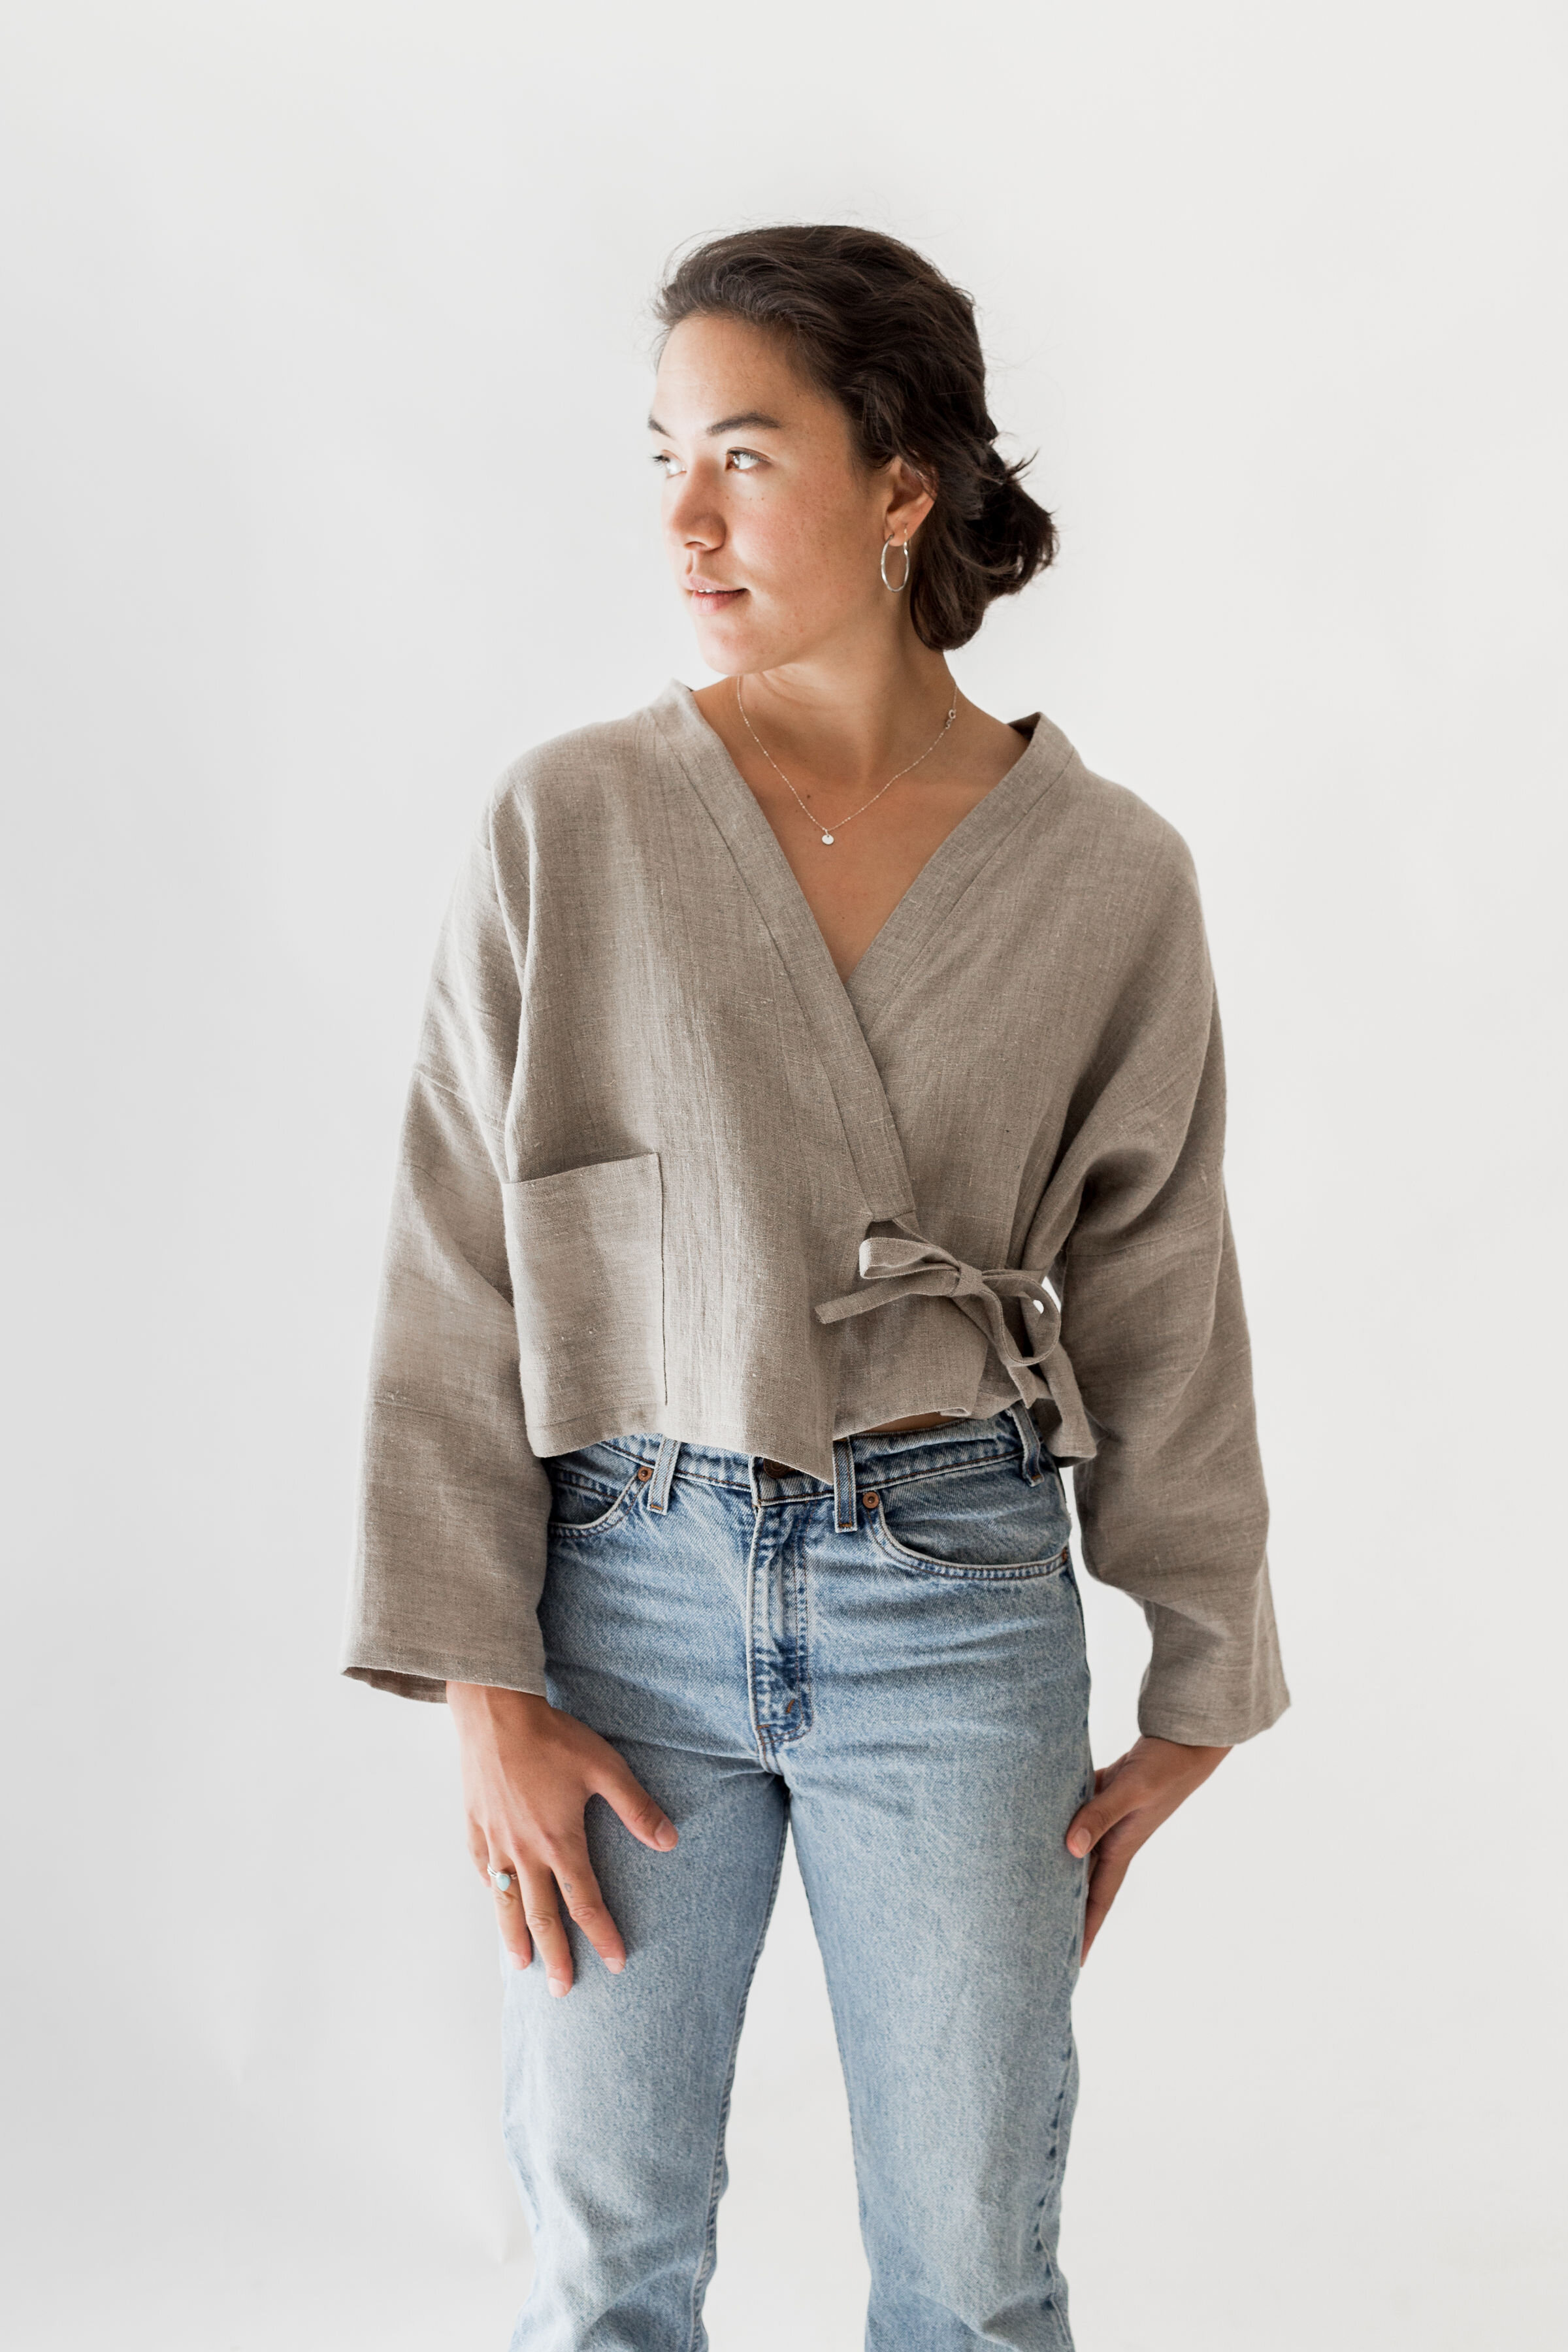 Nomi Designs wrap top in natural minimalist linen clothing copy.jpg